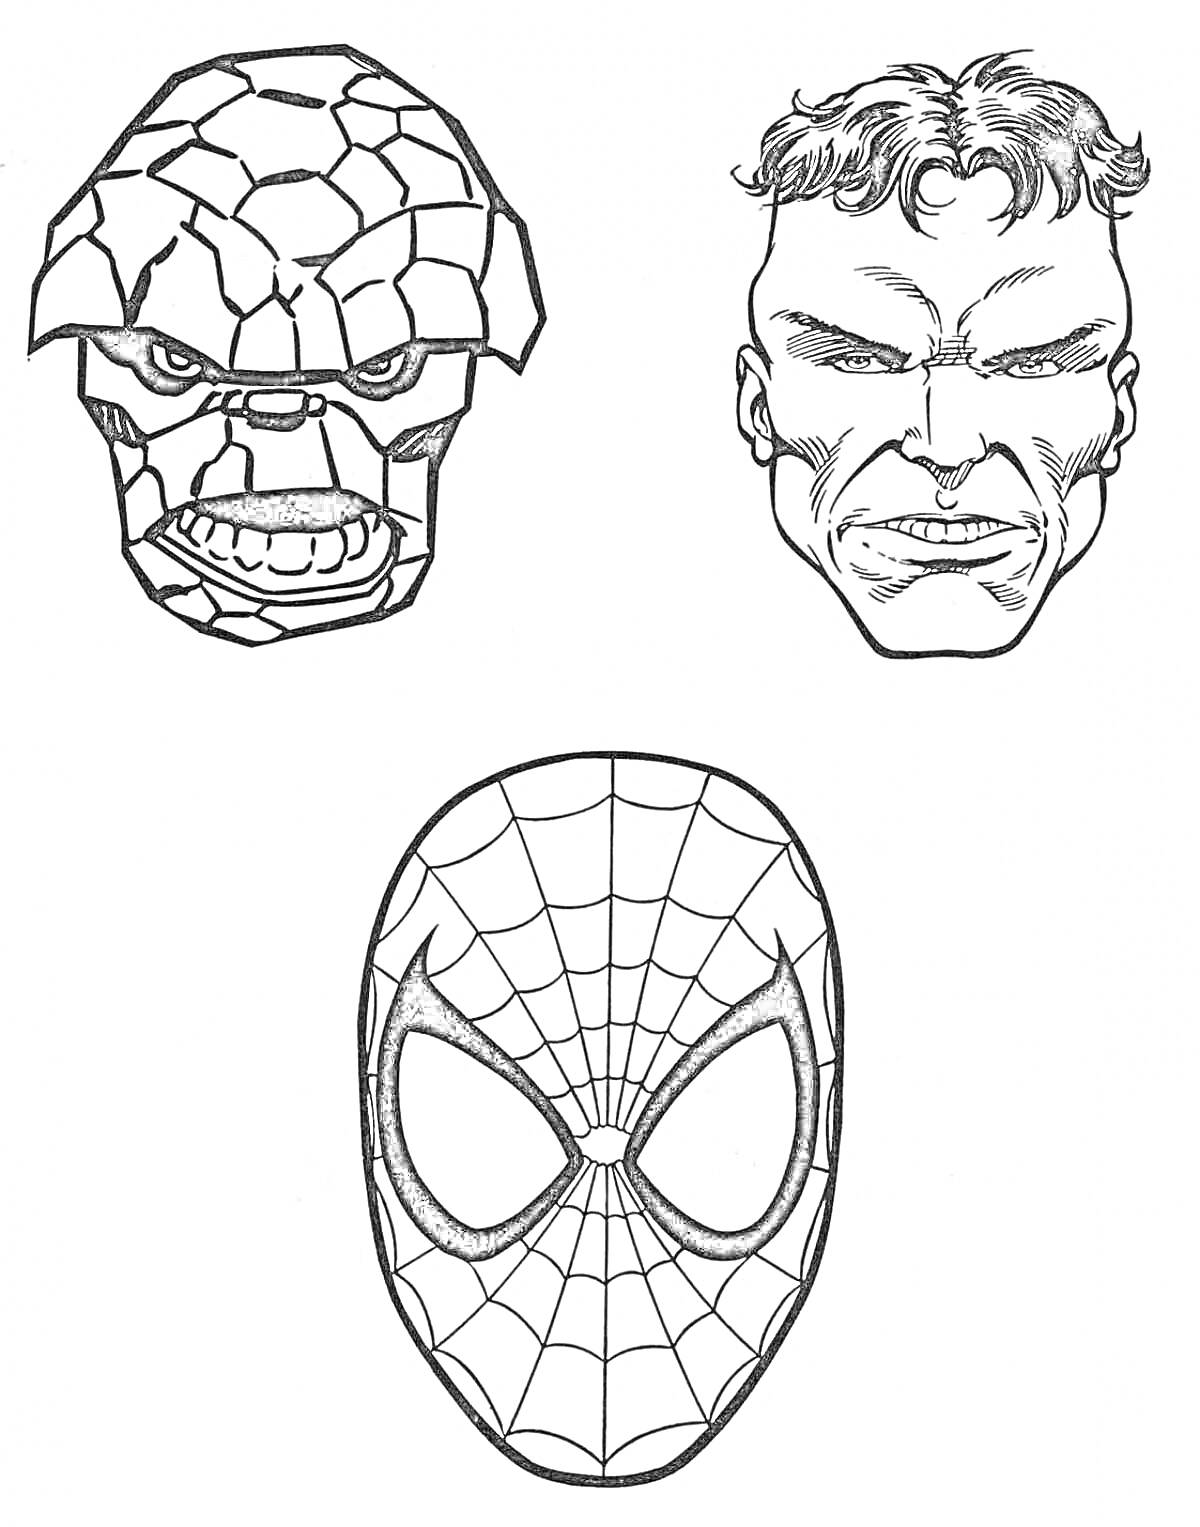 Раскраска Раскраска с элементами: лицо мистера Фантастика, лицо Халка, маска Человека-паука